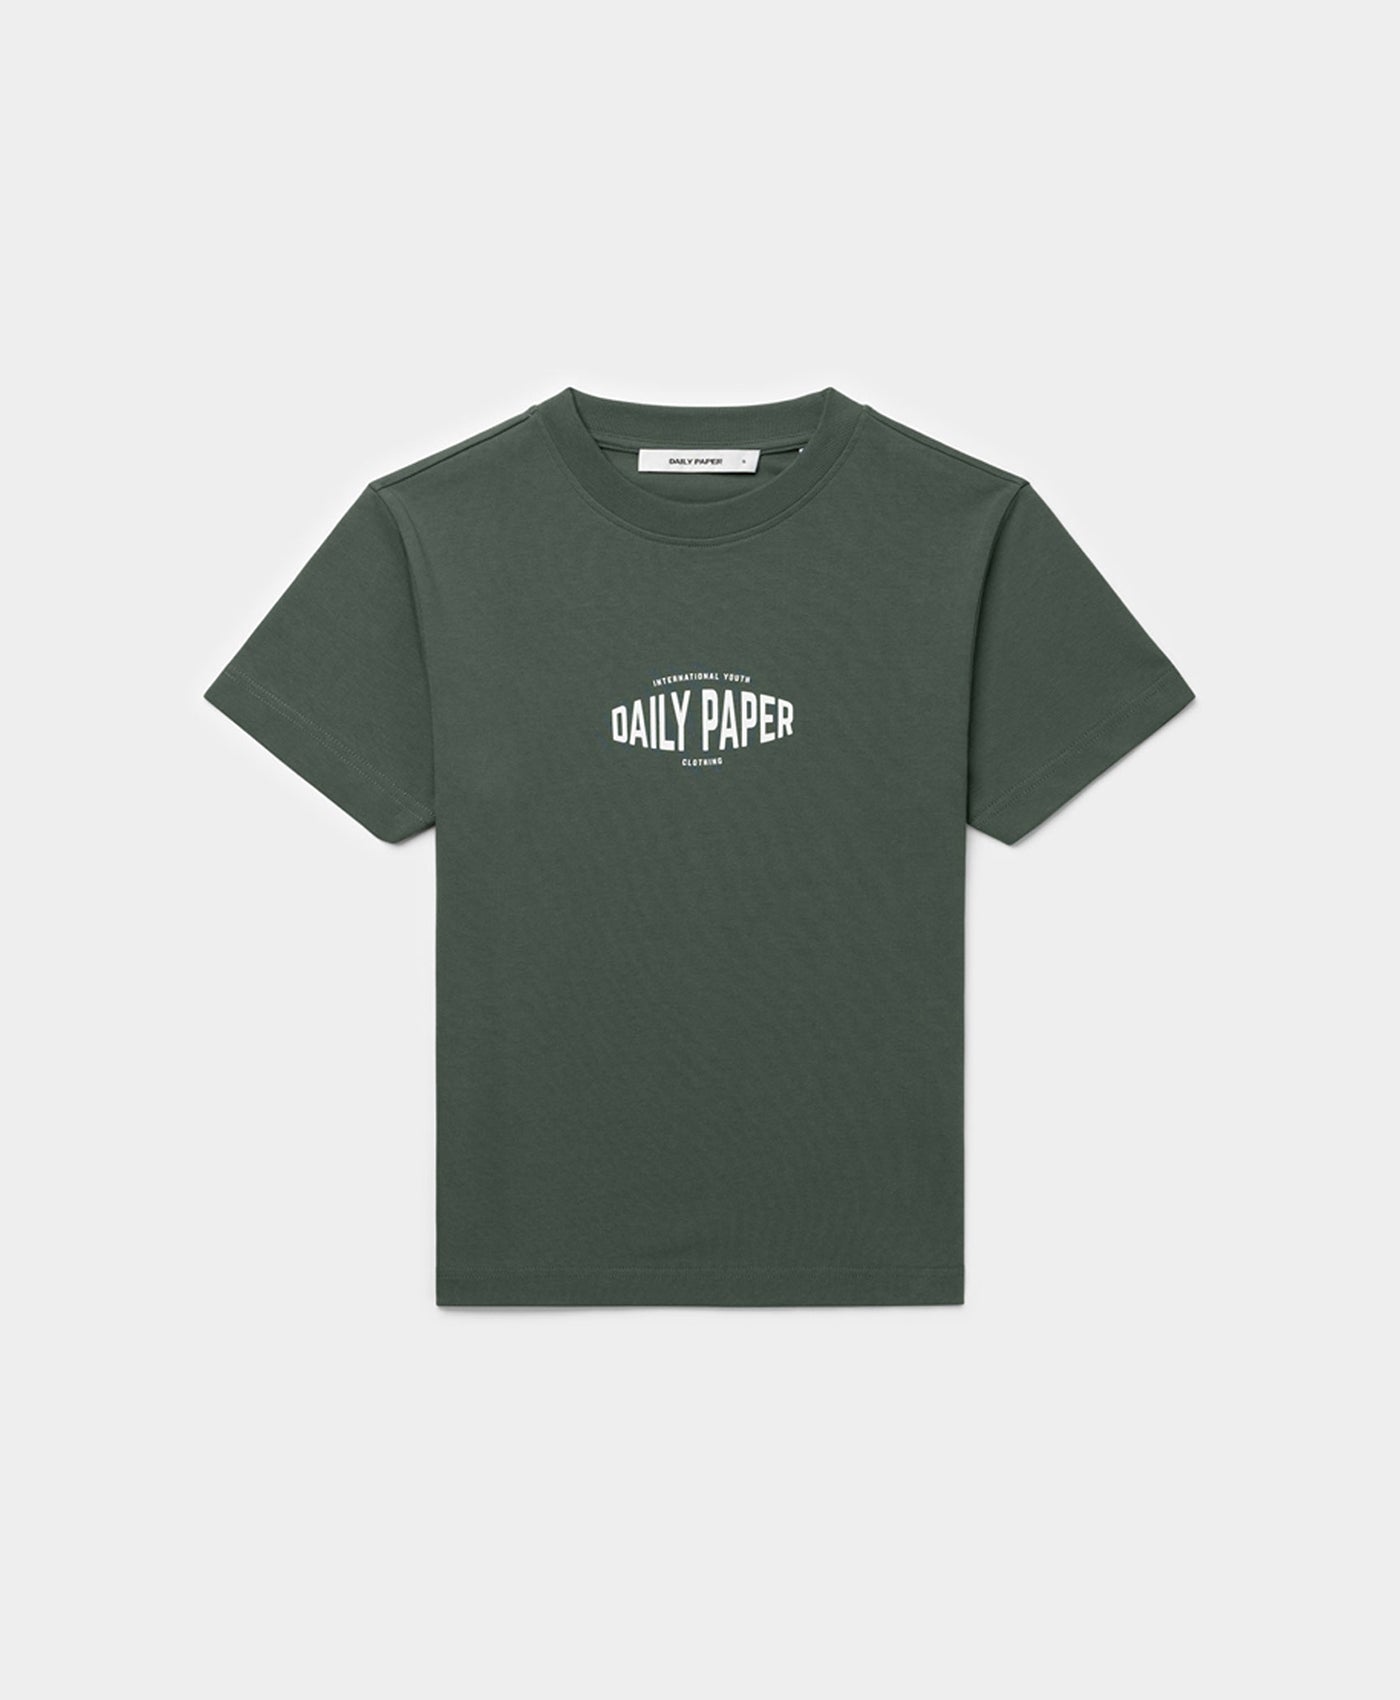 DP - Chic Green Estan Youth T-Shirt - Packshot - Front